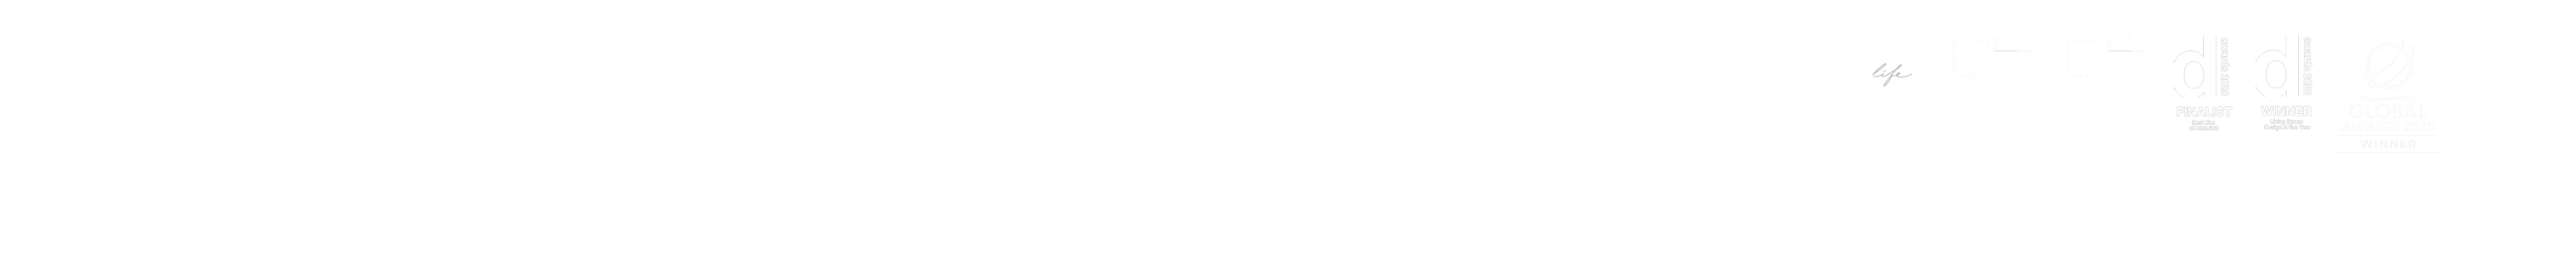 paul mcaneary awards